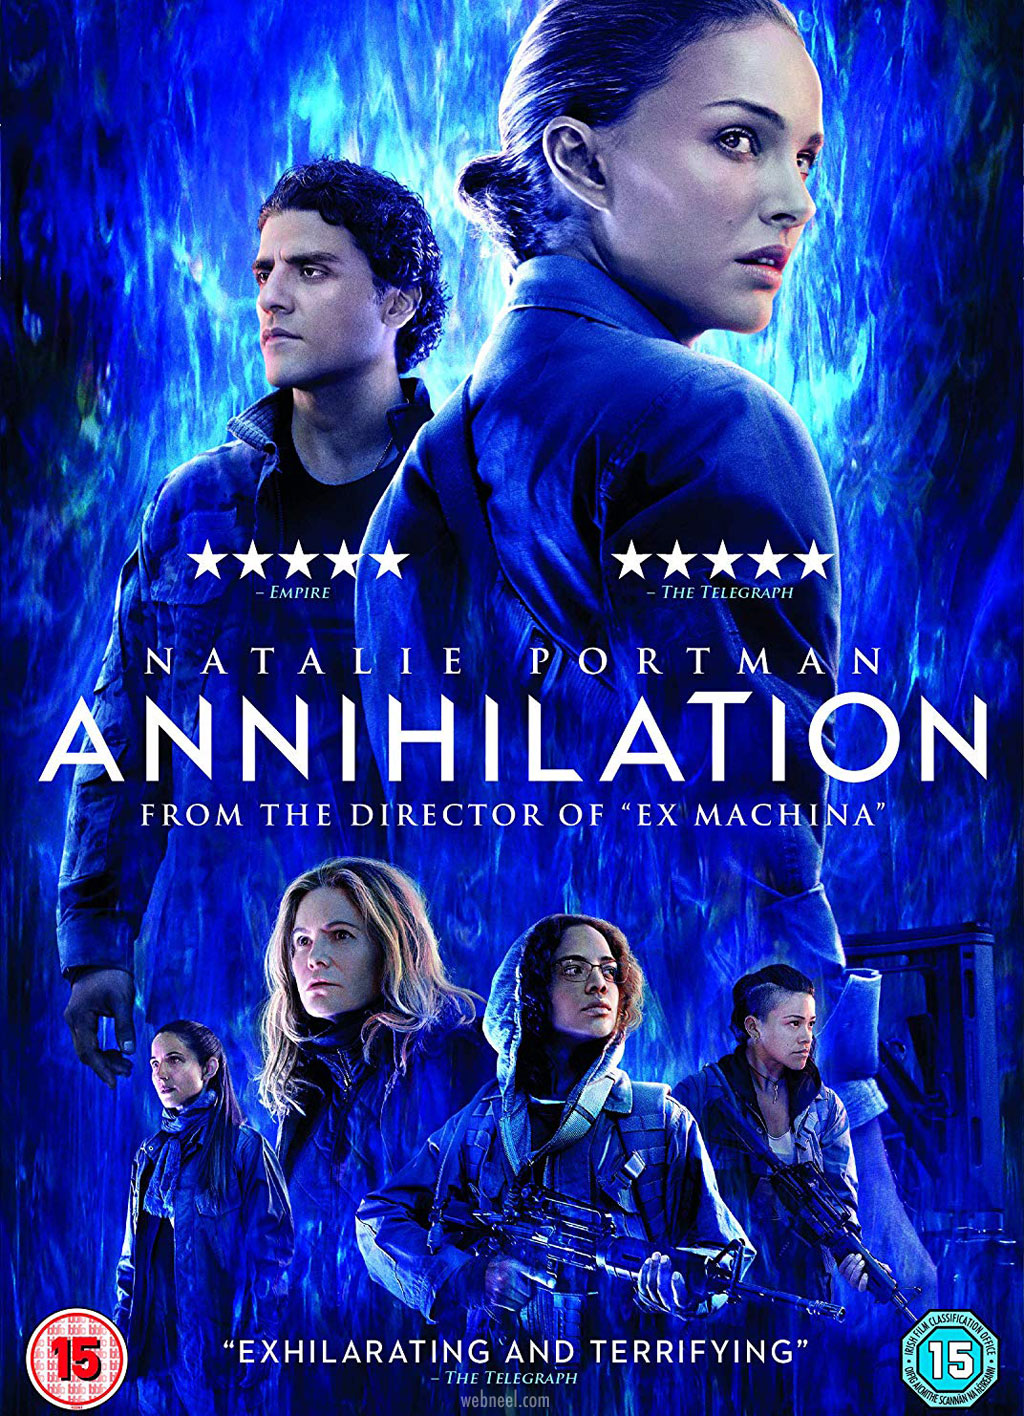 movie poster design annihilation color theme